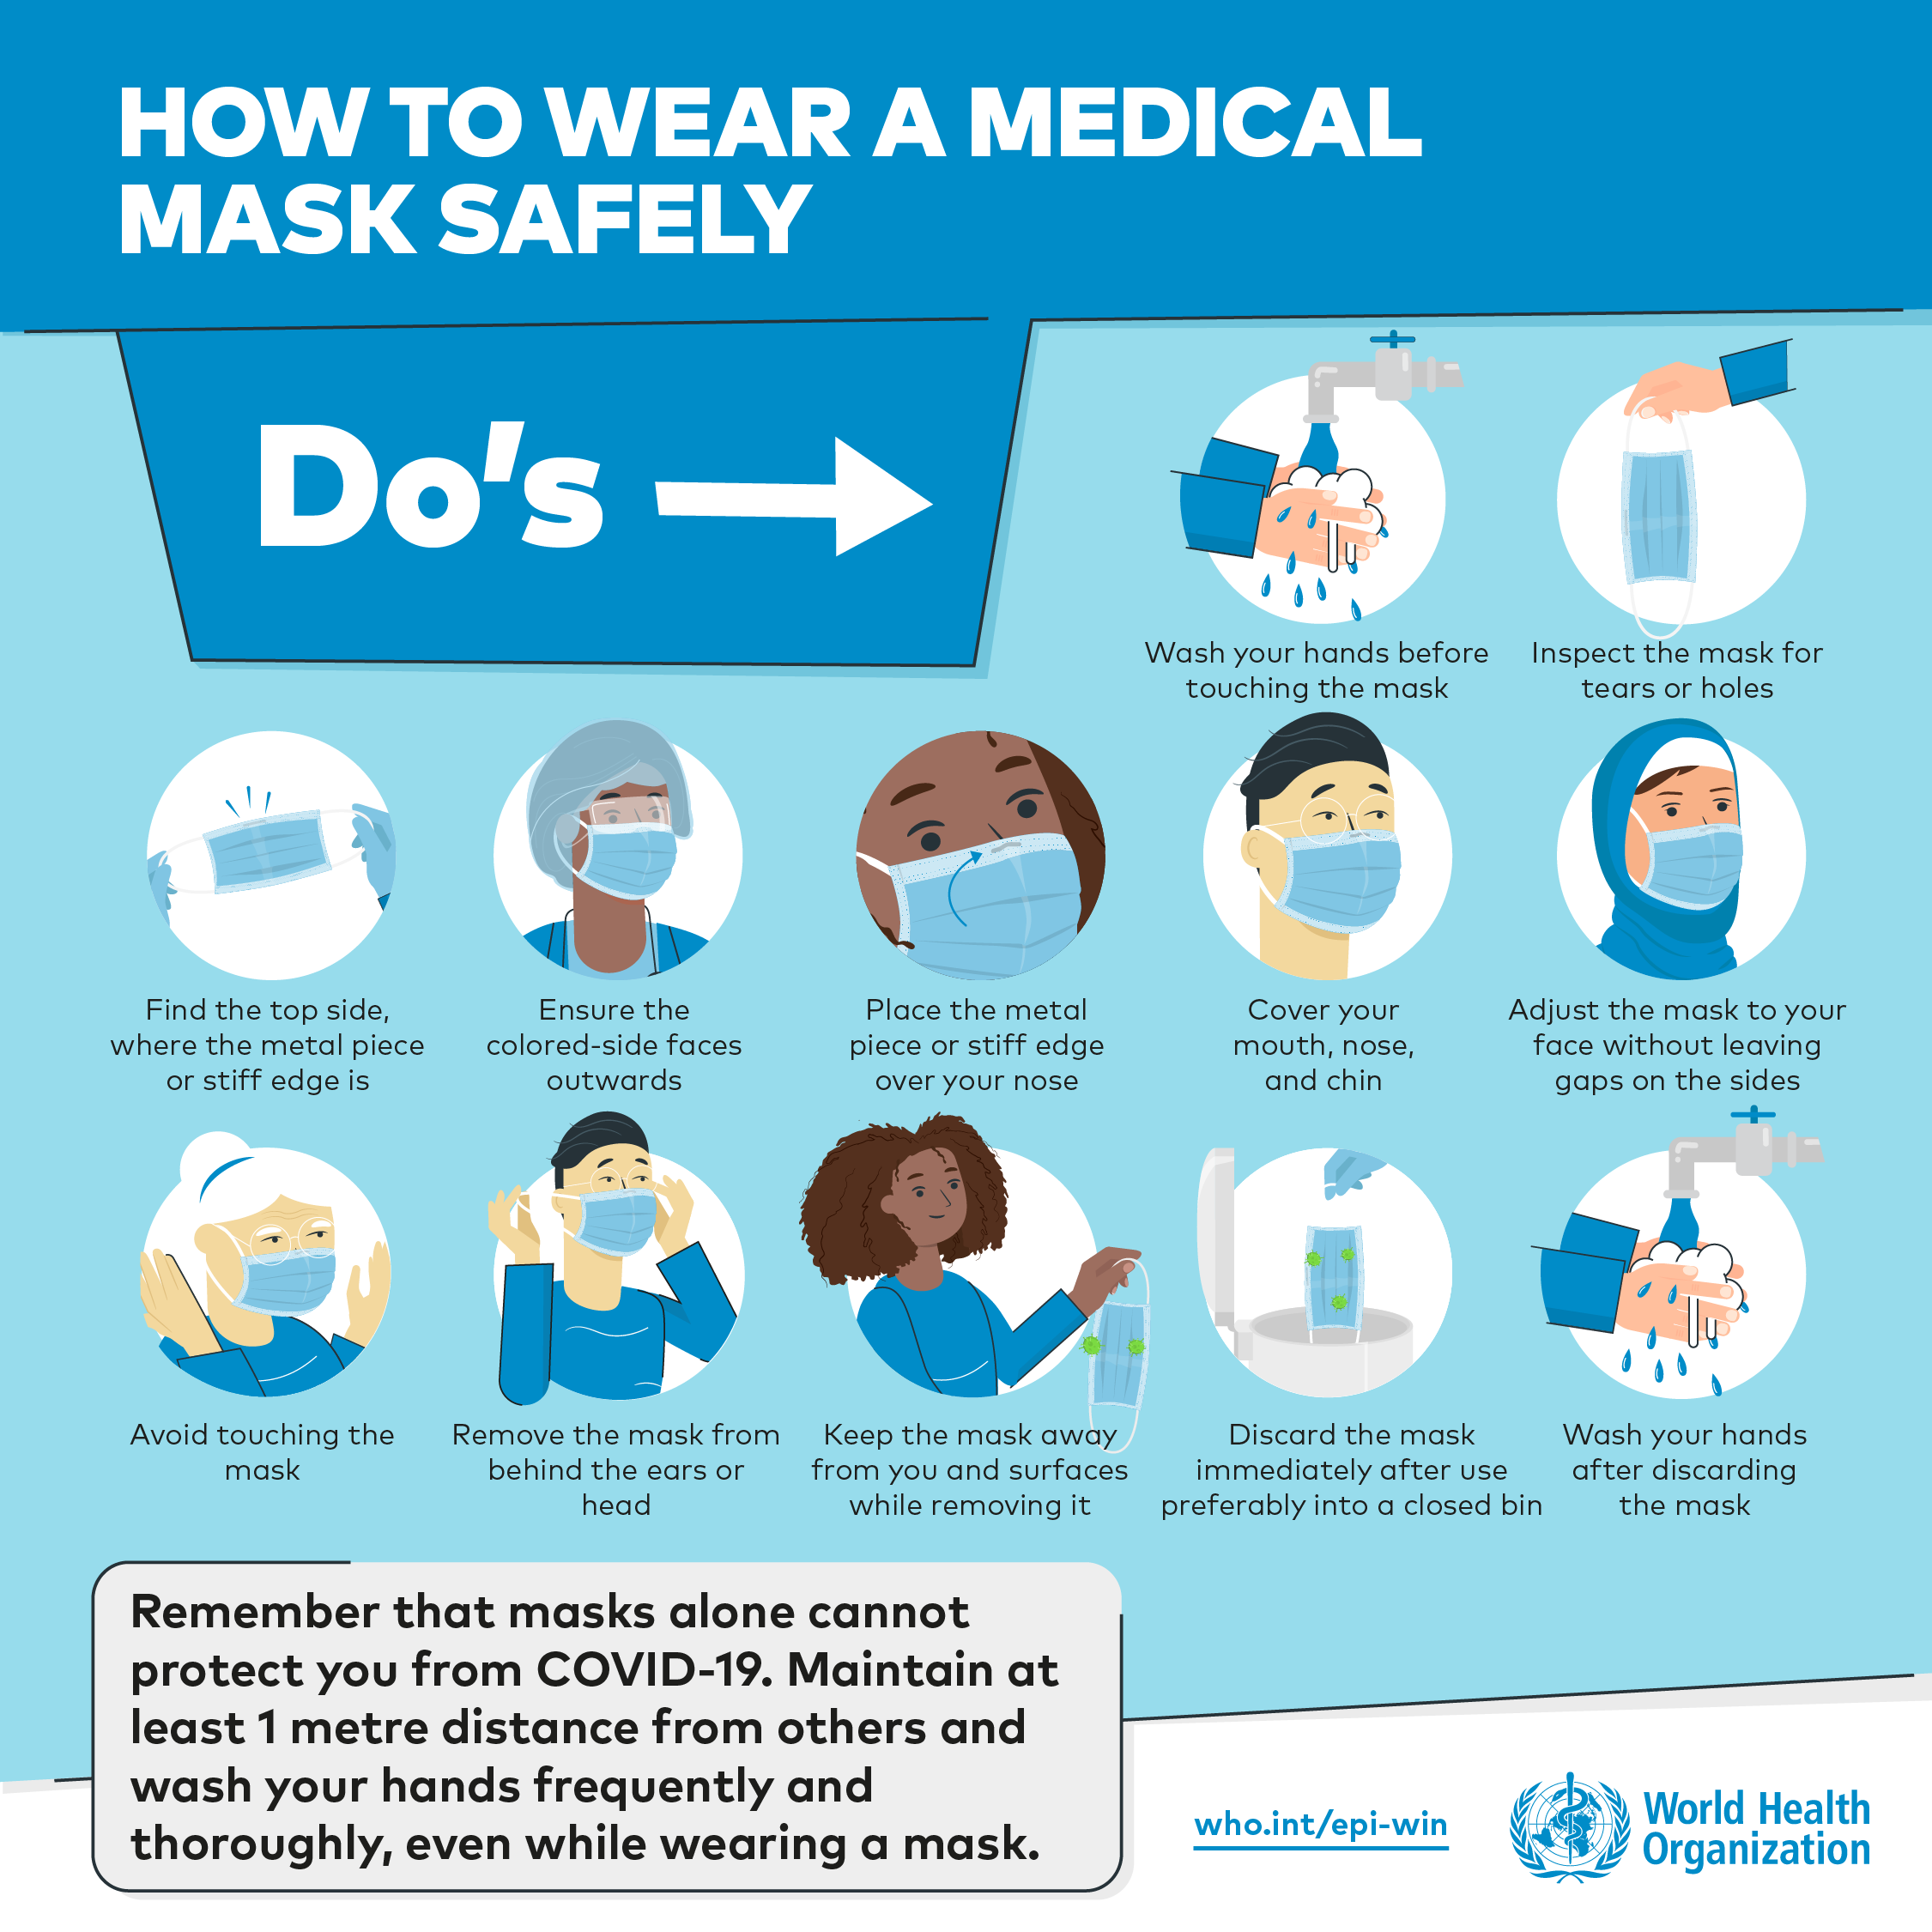 How to wear medical masks safely?